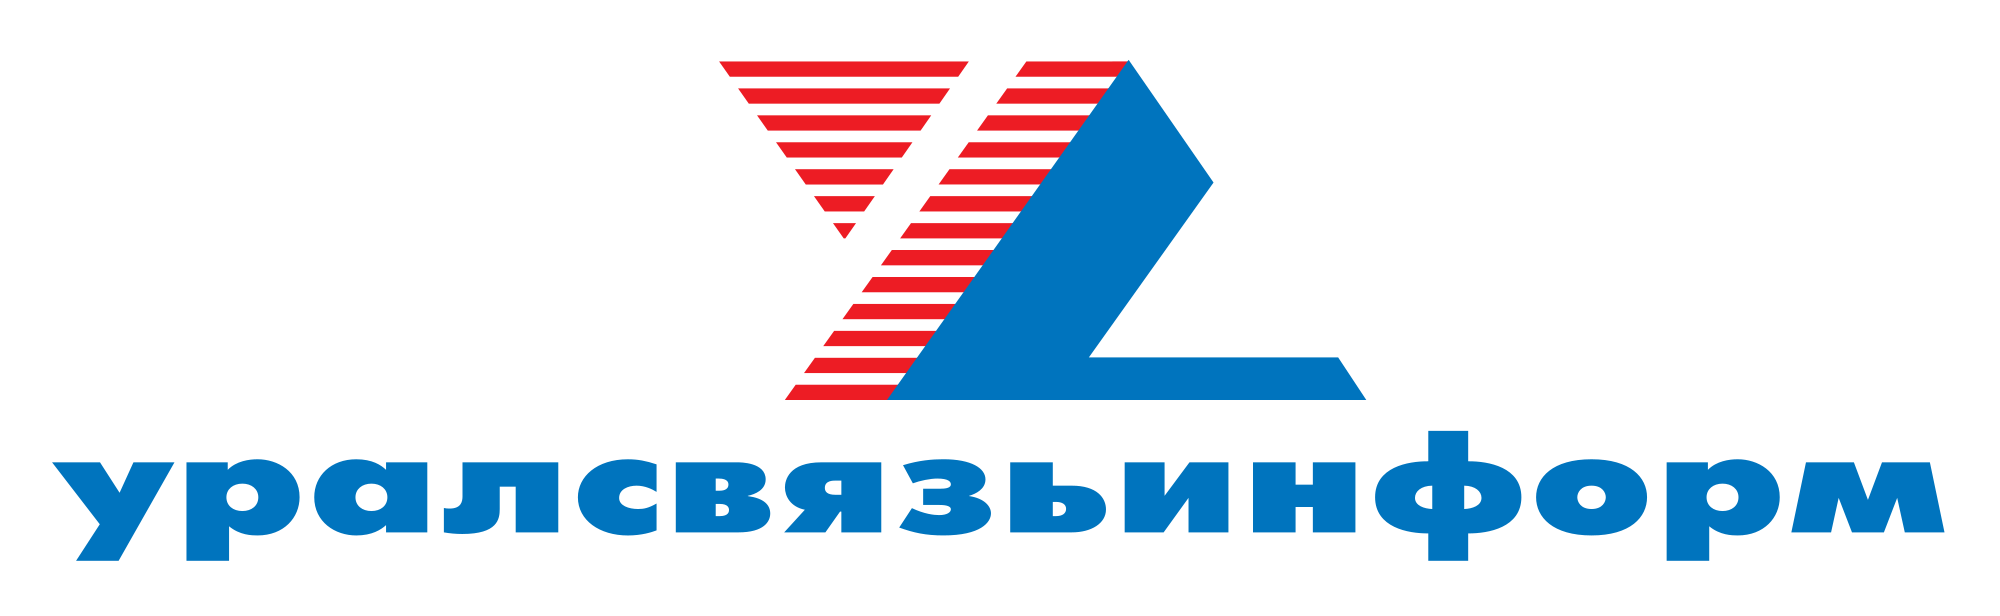 Uralsvyazinform Brand Logo